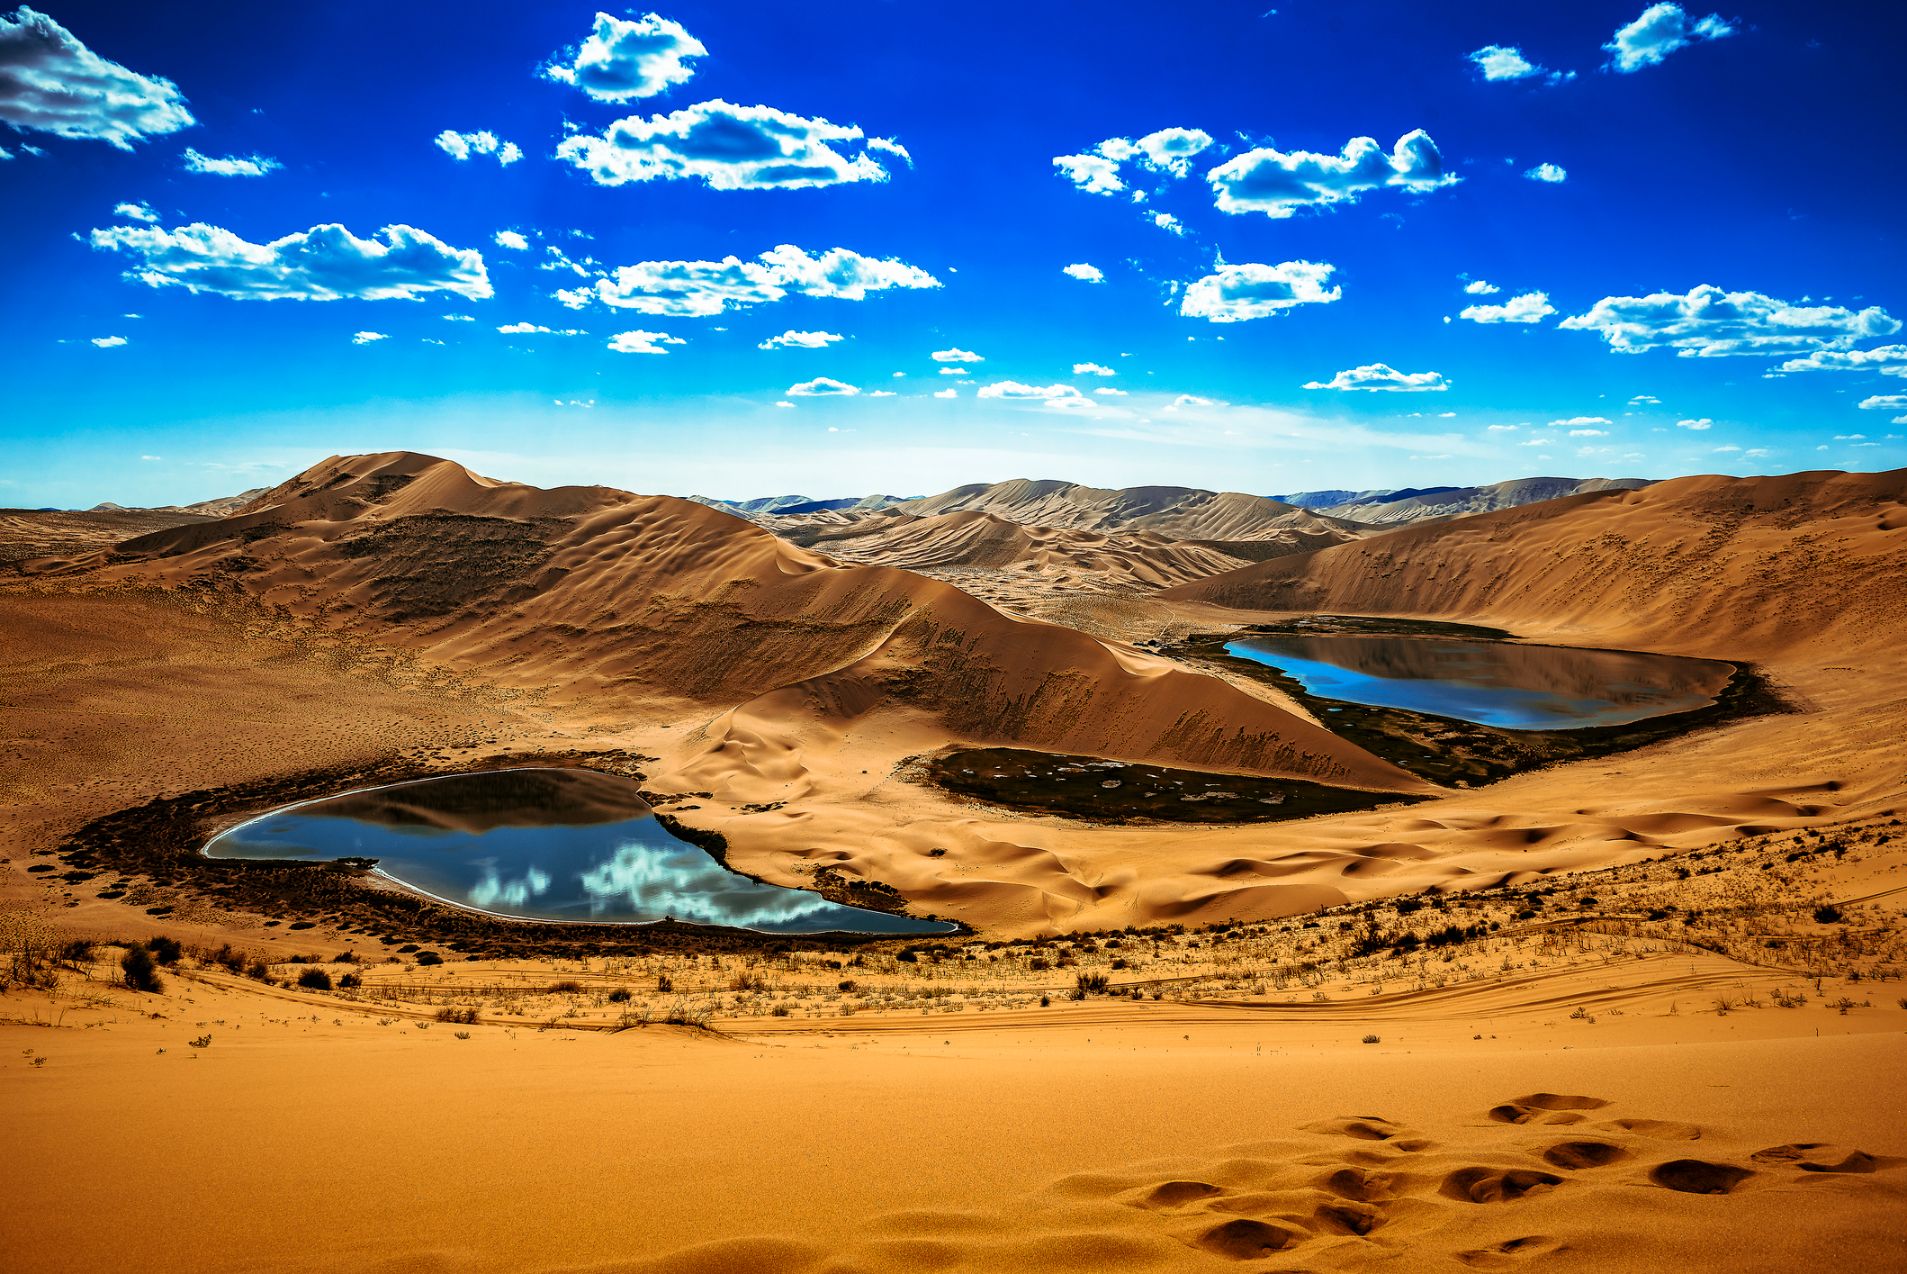 Lakes and dunes in the Badain Jaran Desert, Inner Mongolia